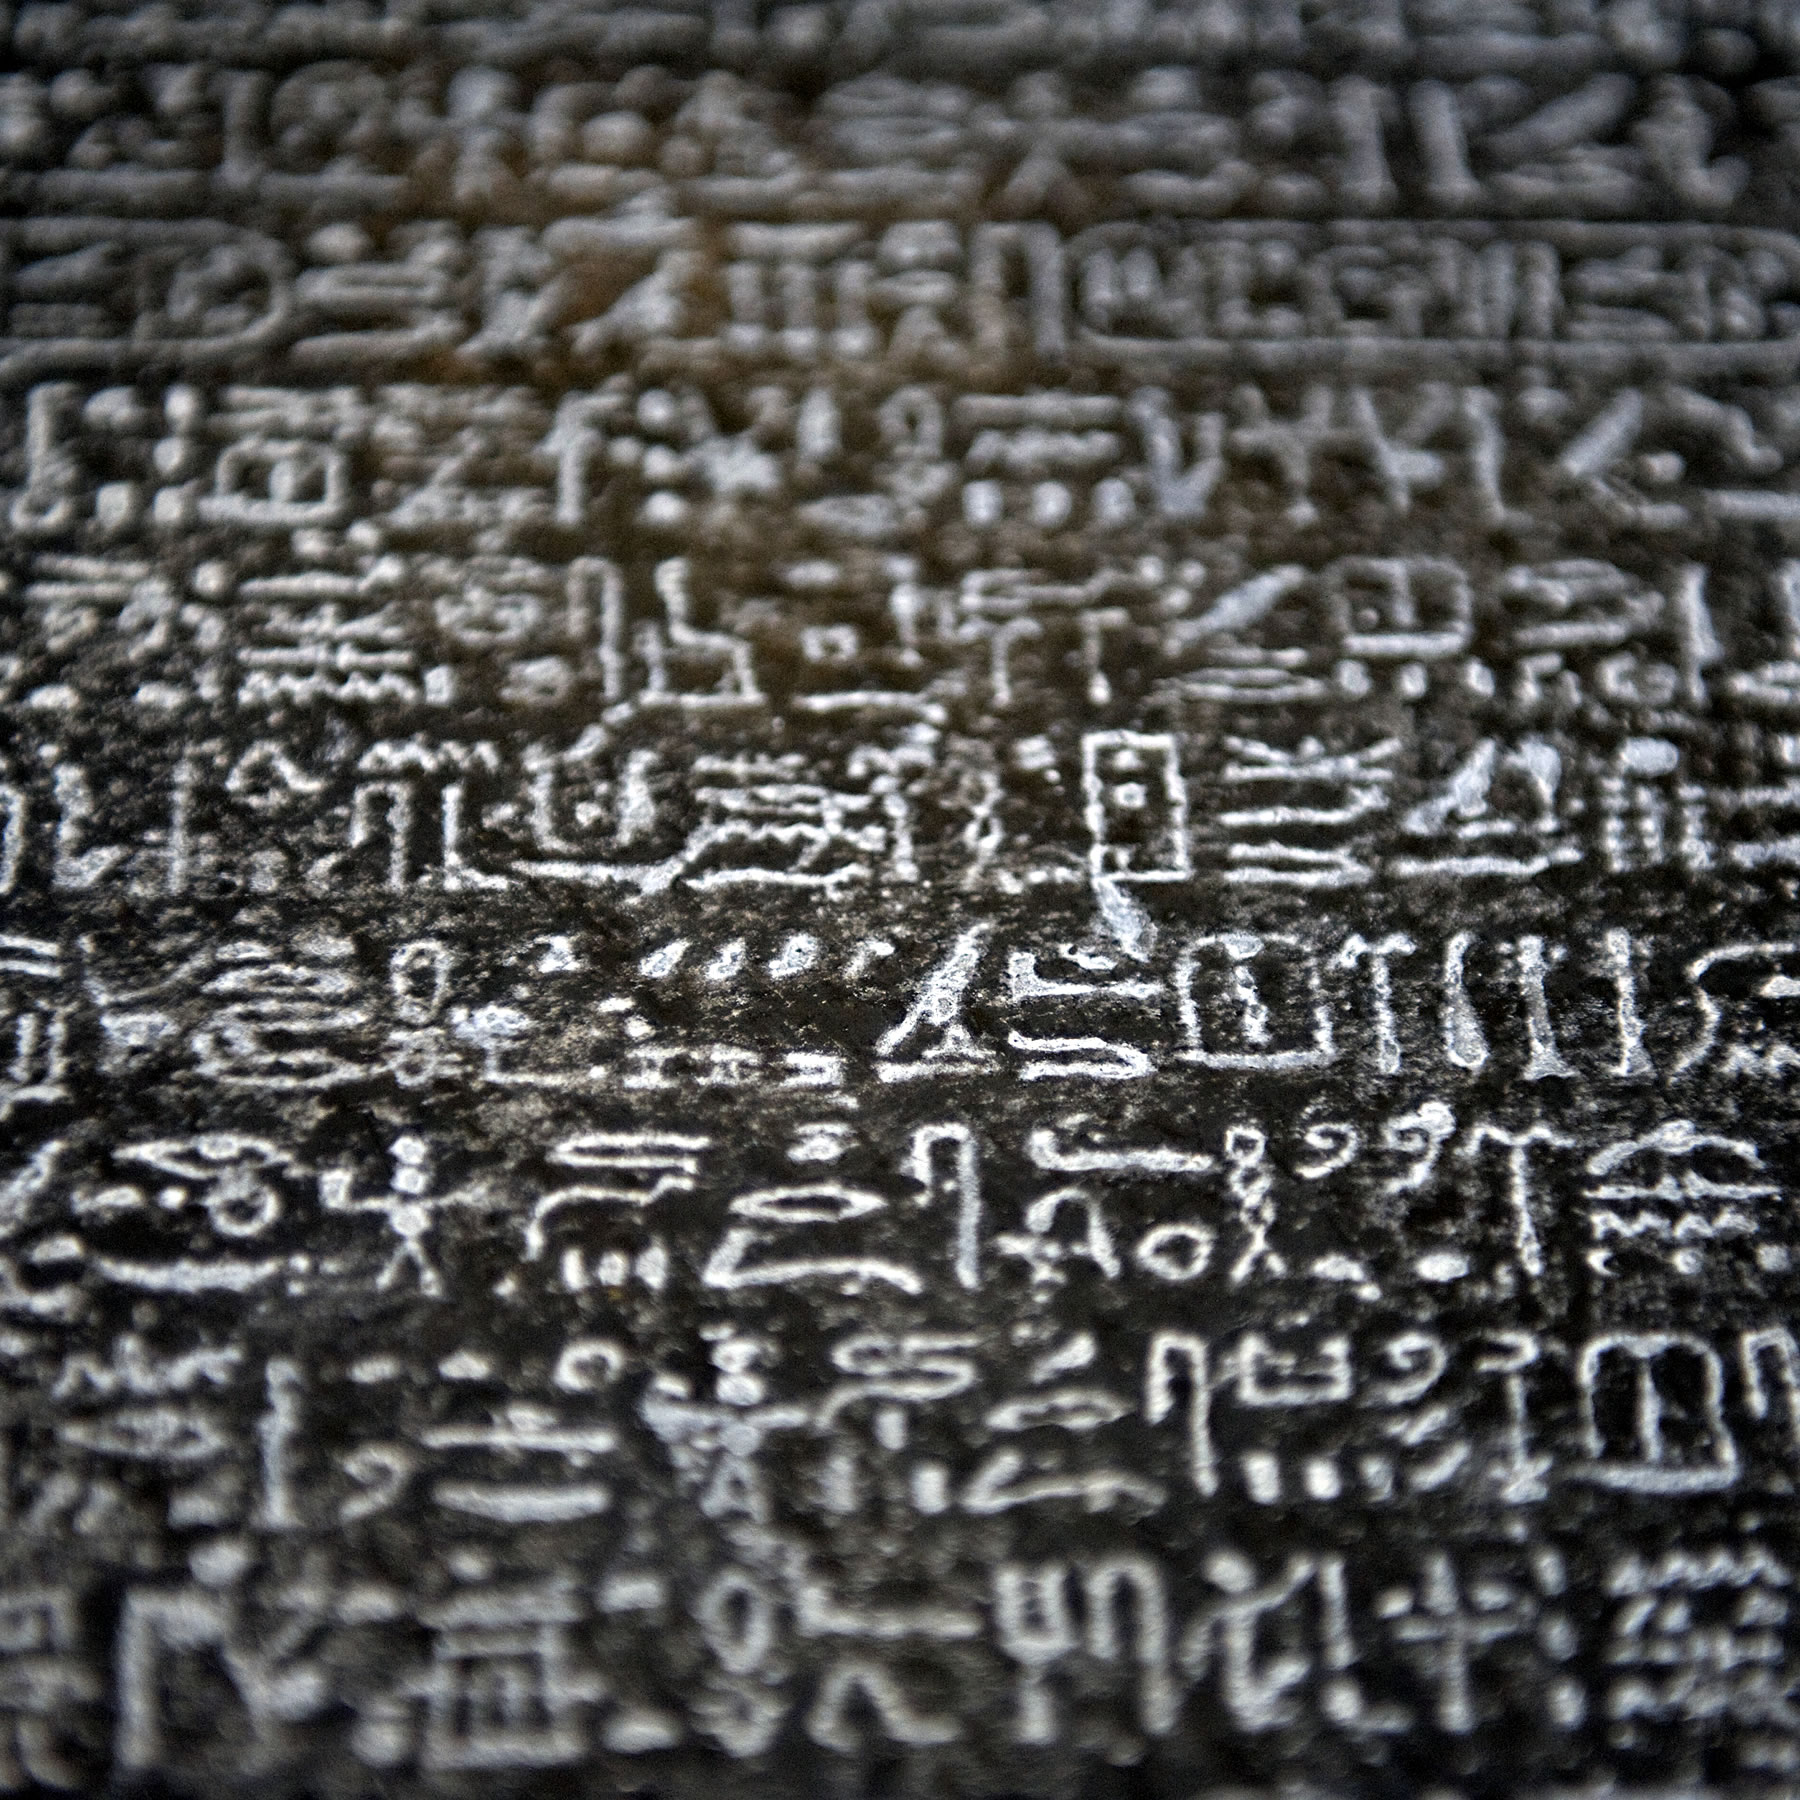 macro photograph of the Rosetta Stone